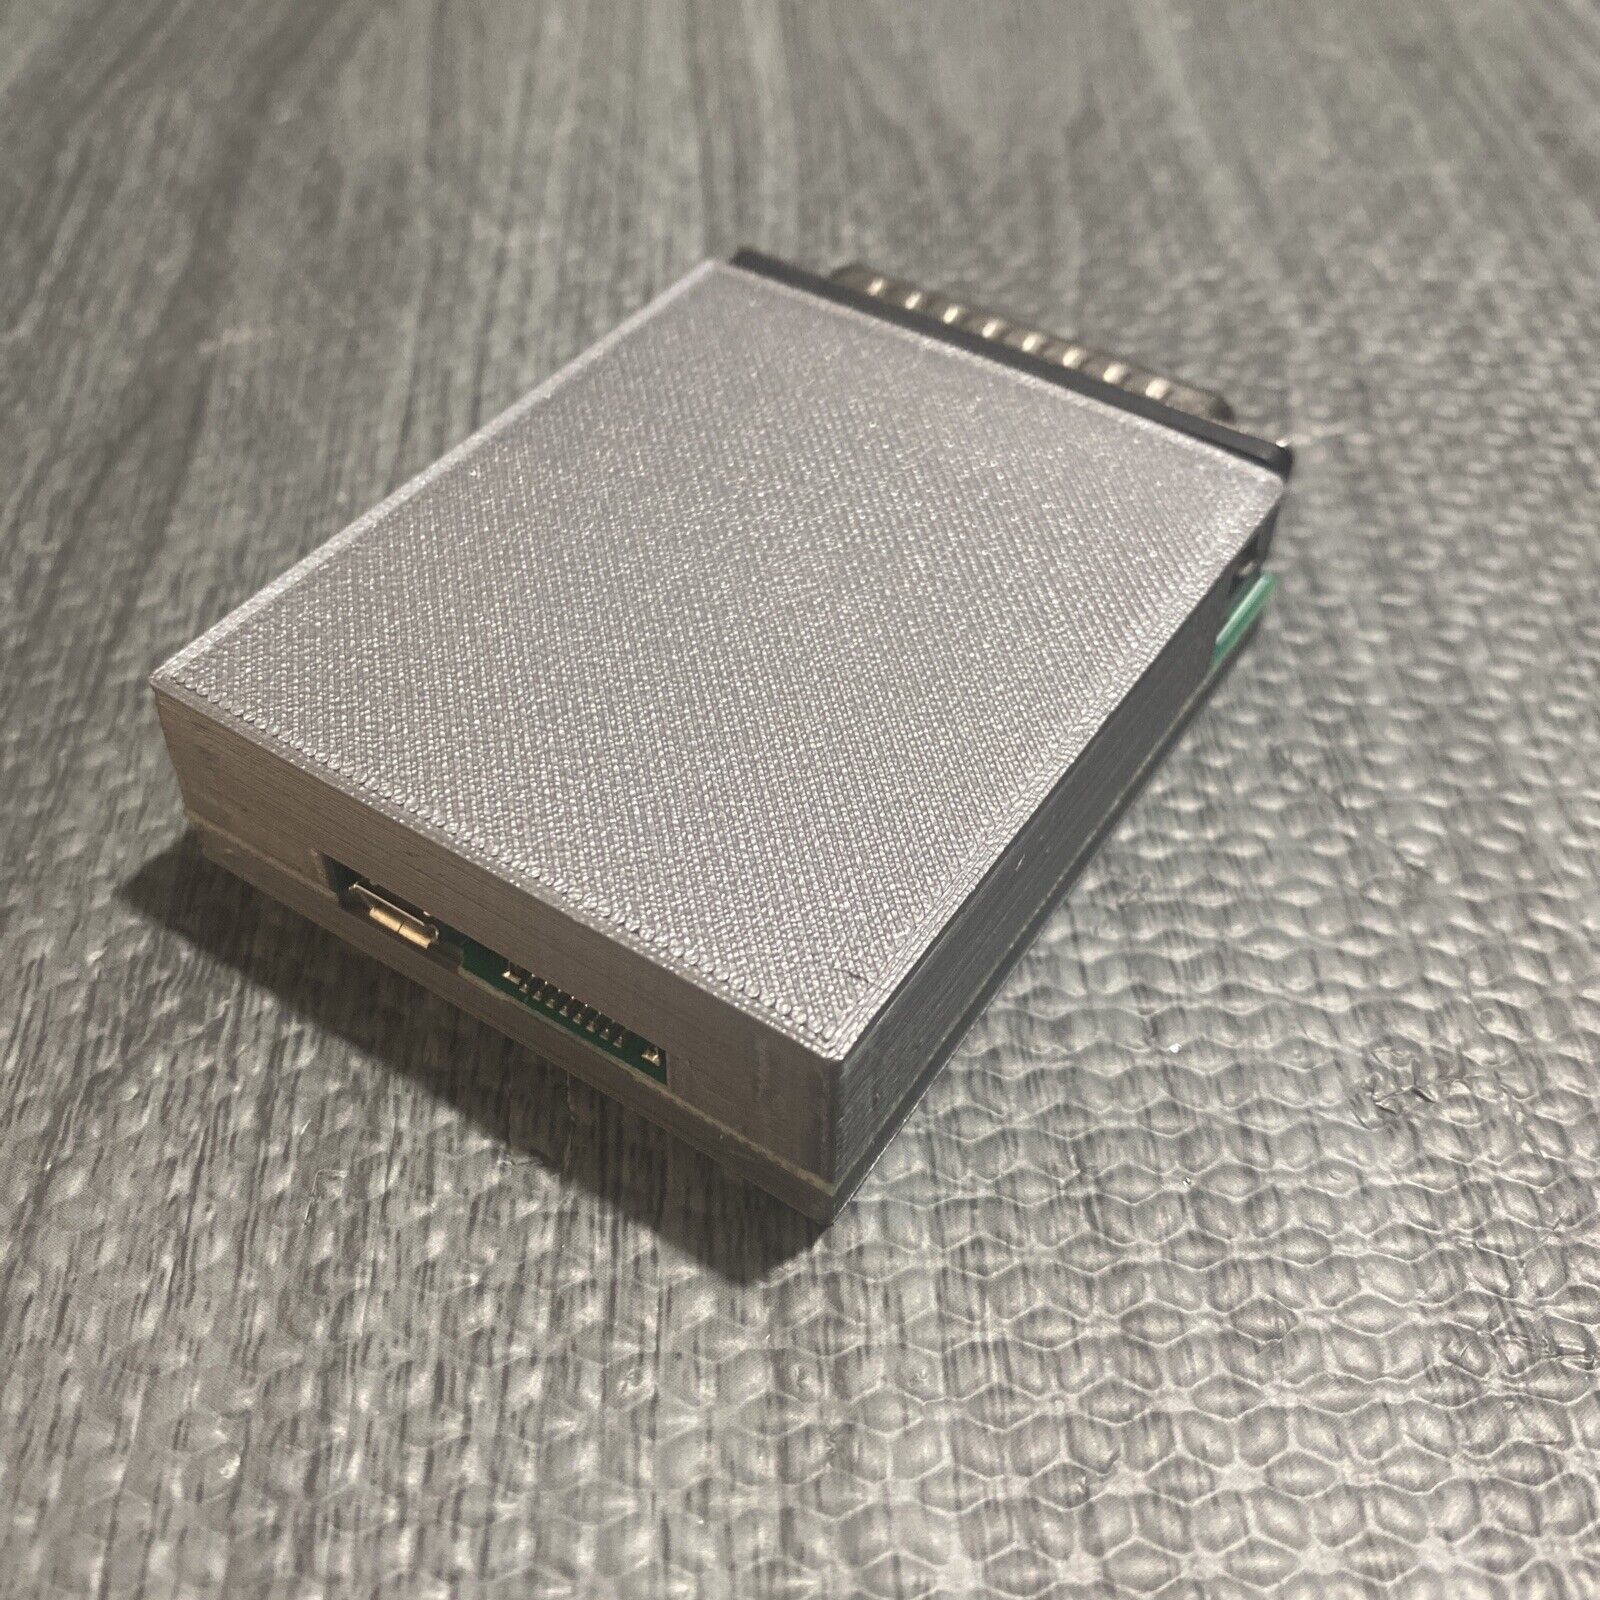 SCSI2SD for Quadra External SCSI Hard Disk Emulator 25 Pin